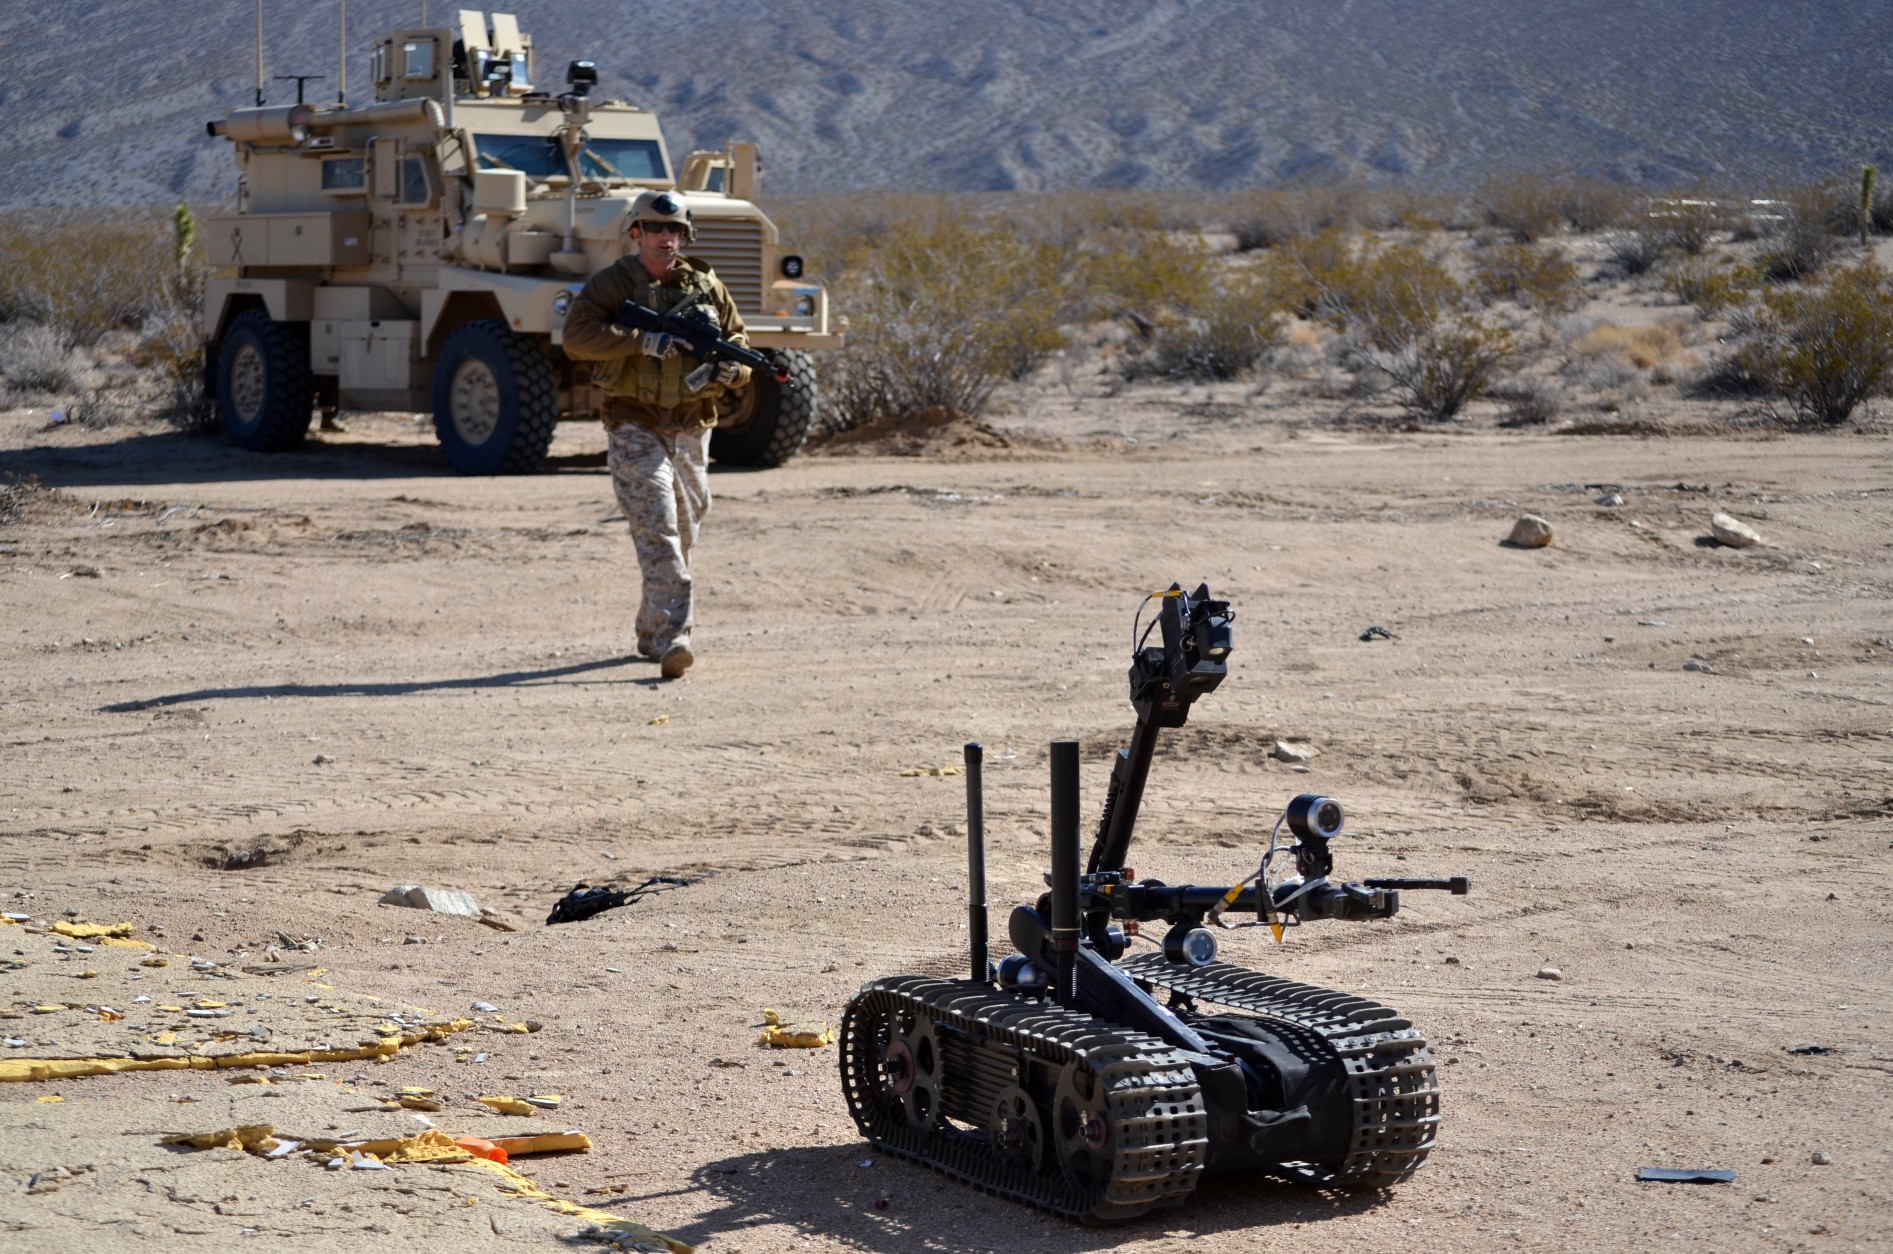 Global Military Robots Market